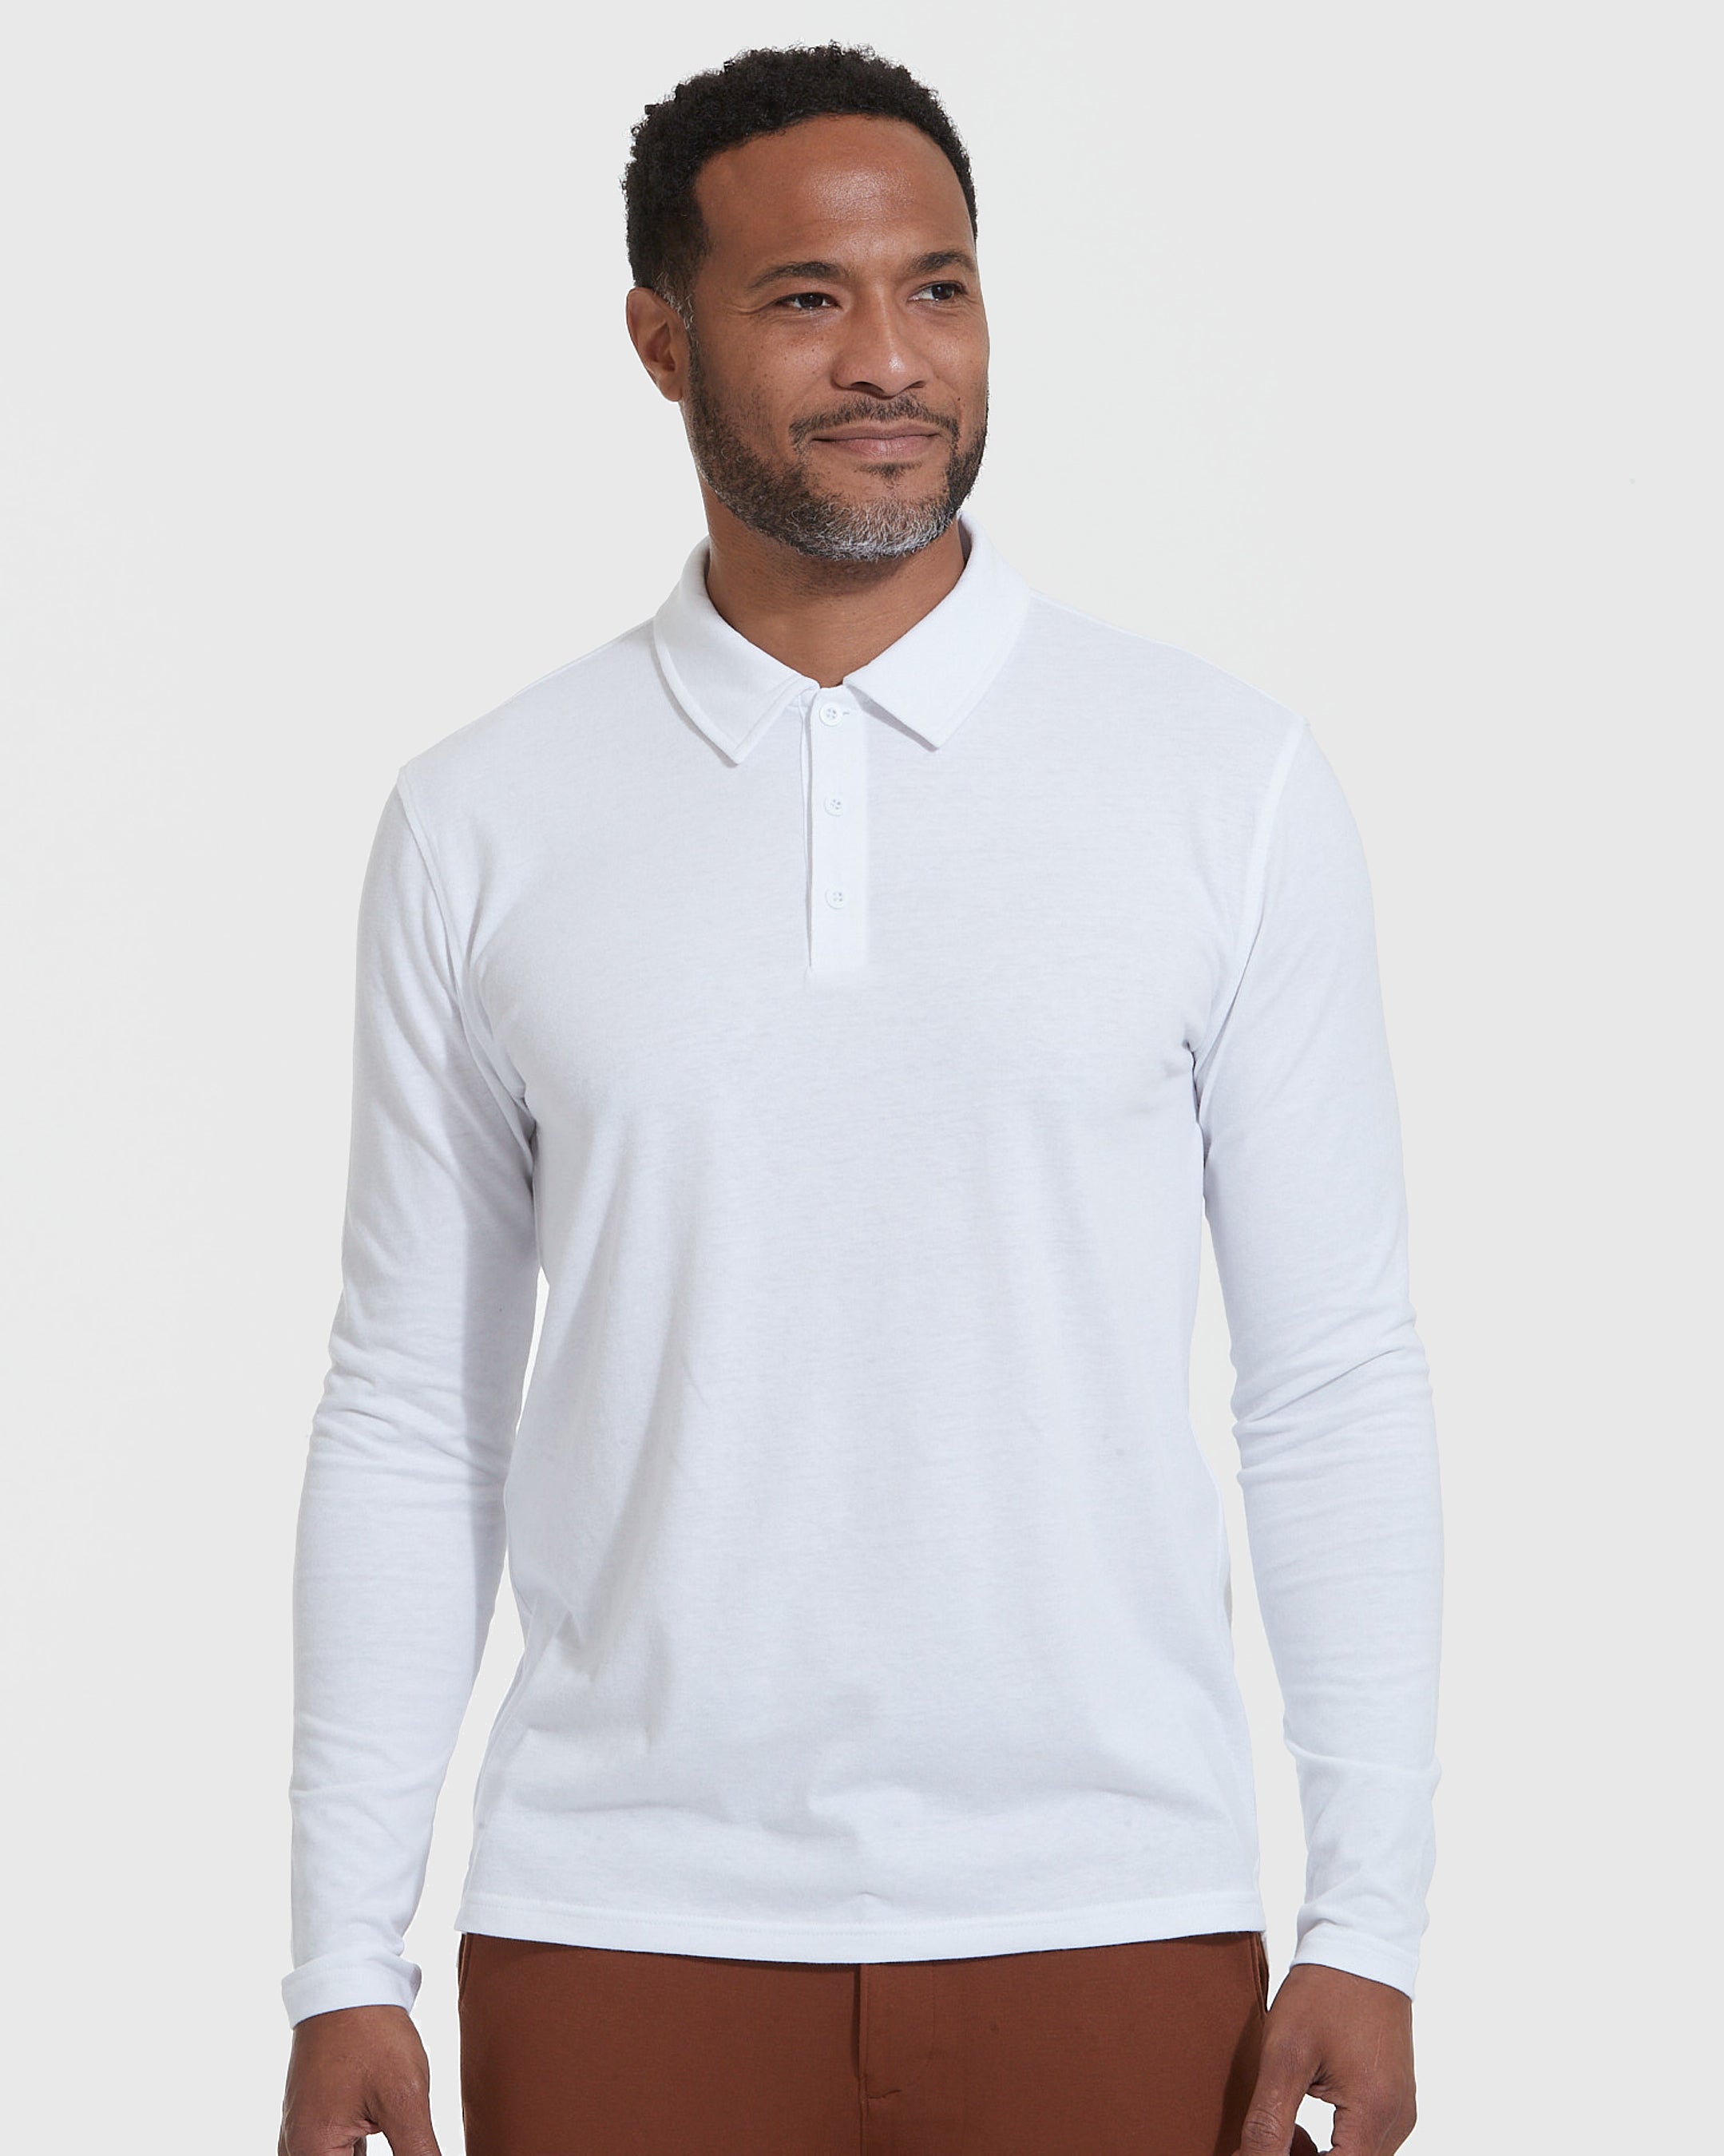 White Long Sleeve Polo Shirts | Men's White Long Sleeve Polo | True Classic